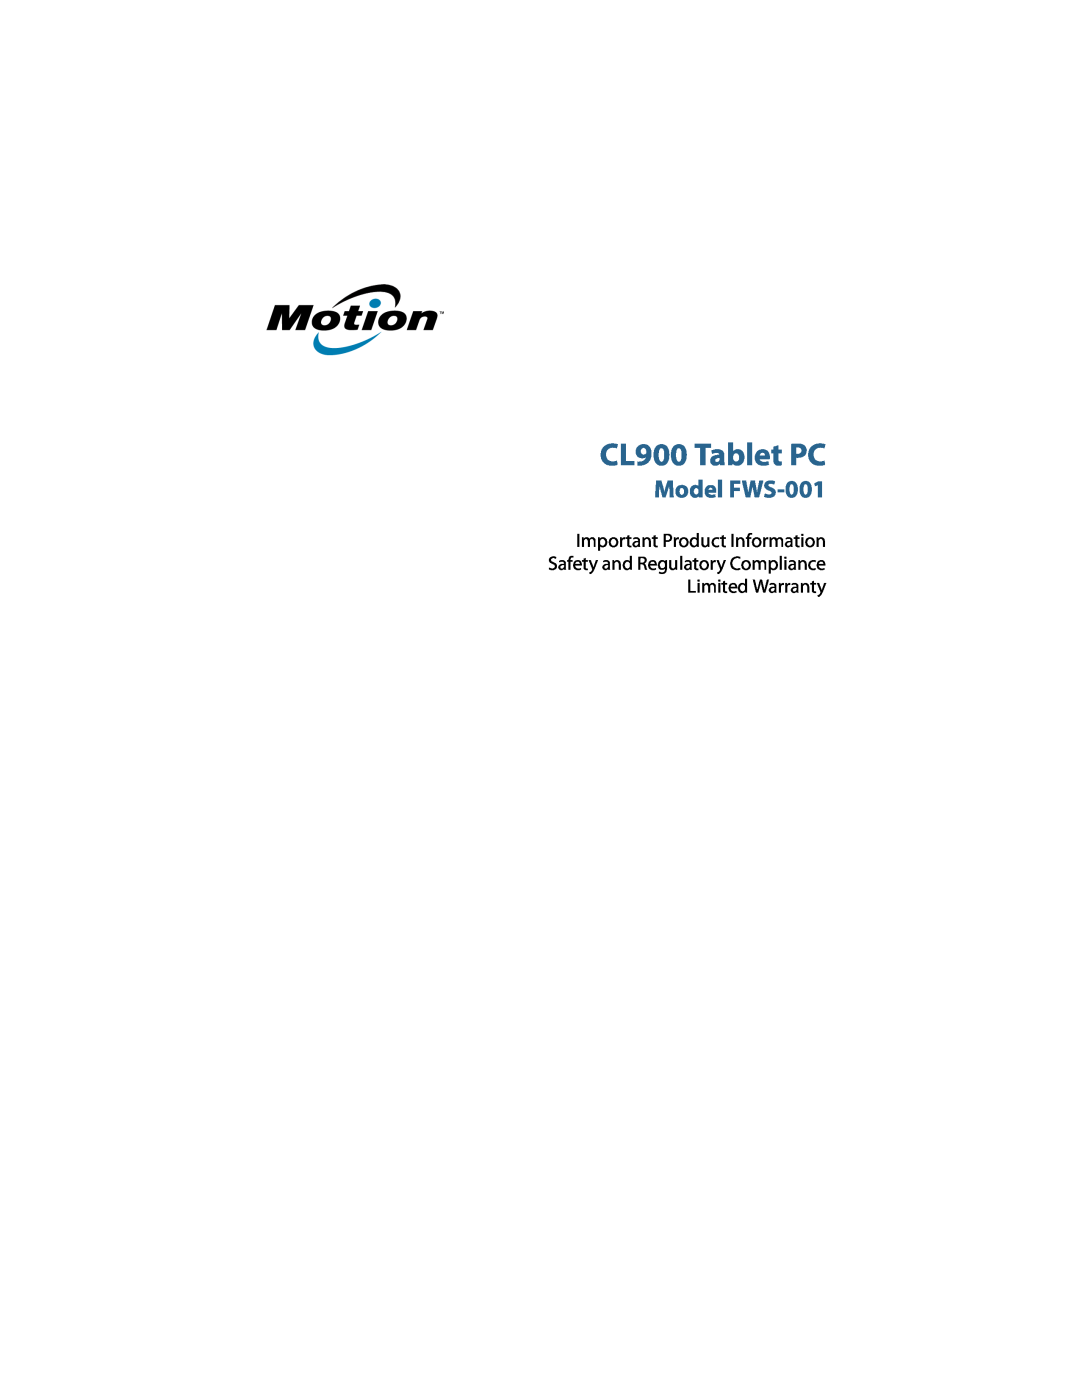 Motion manual CL900 Tablet PC, User’s Guide, Model FWS-001 